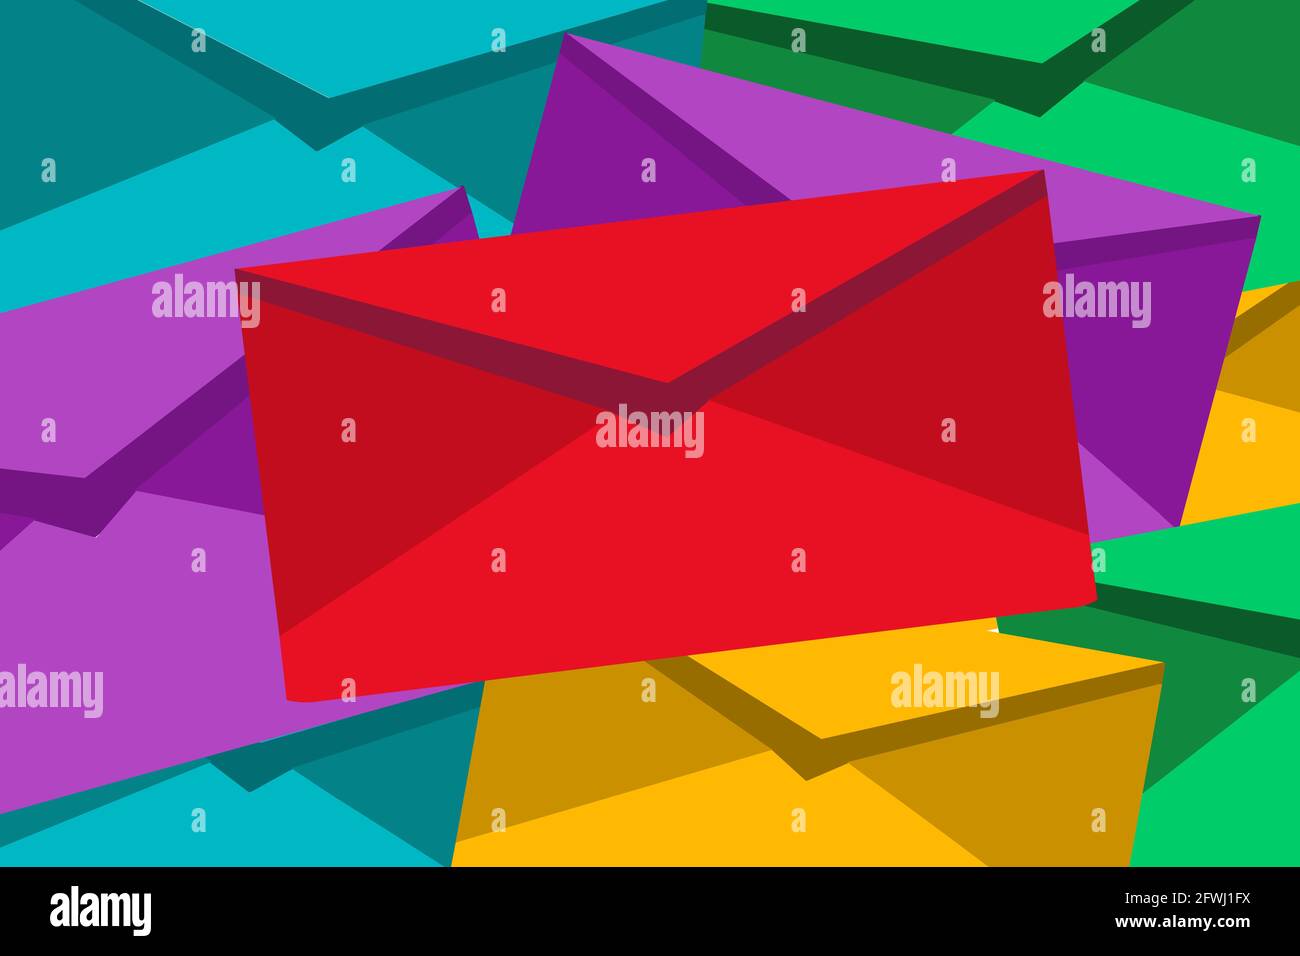 stack of envelopes background vector illustration Stock Vector